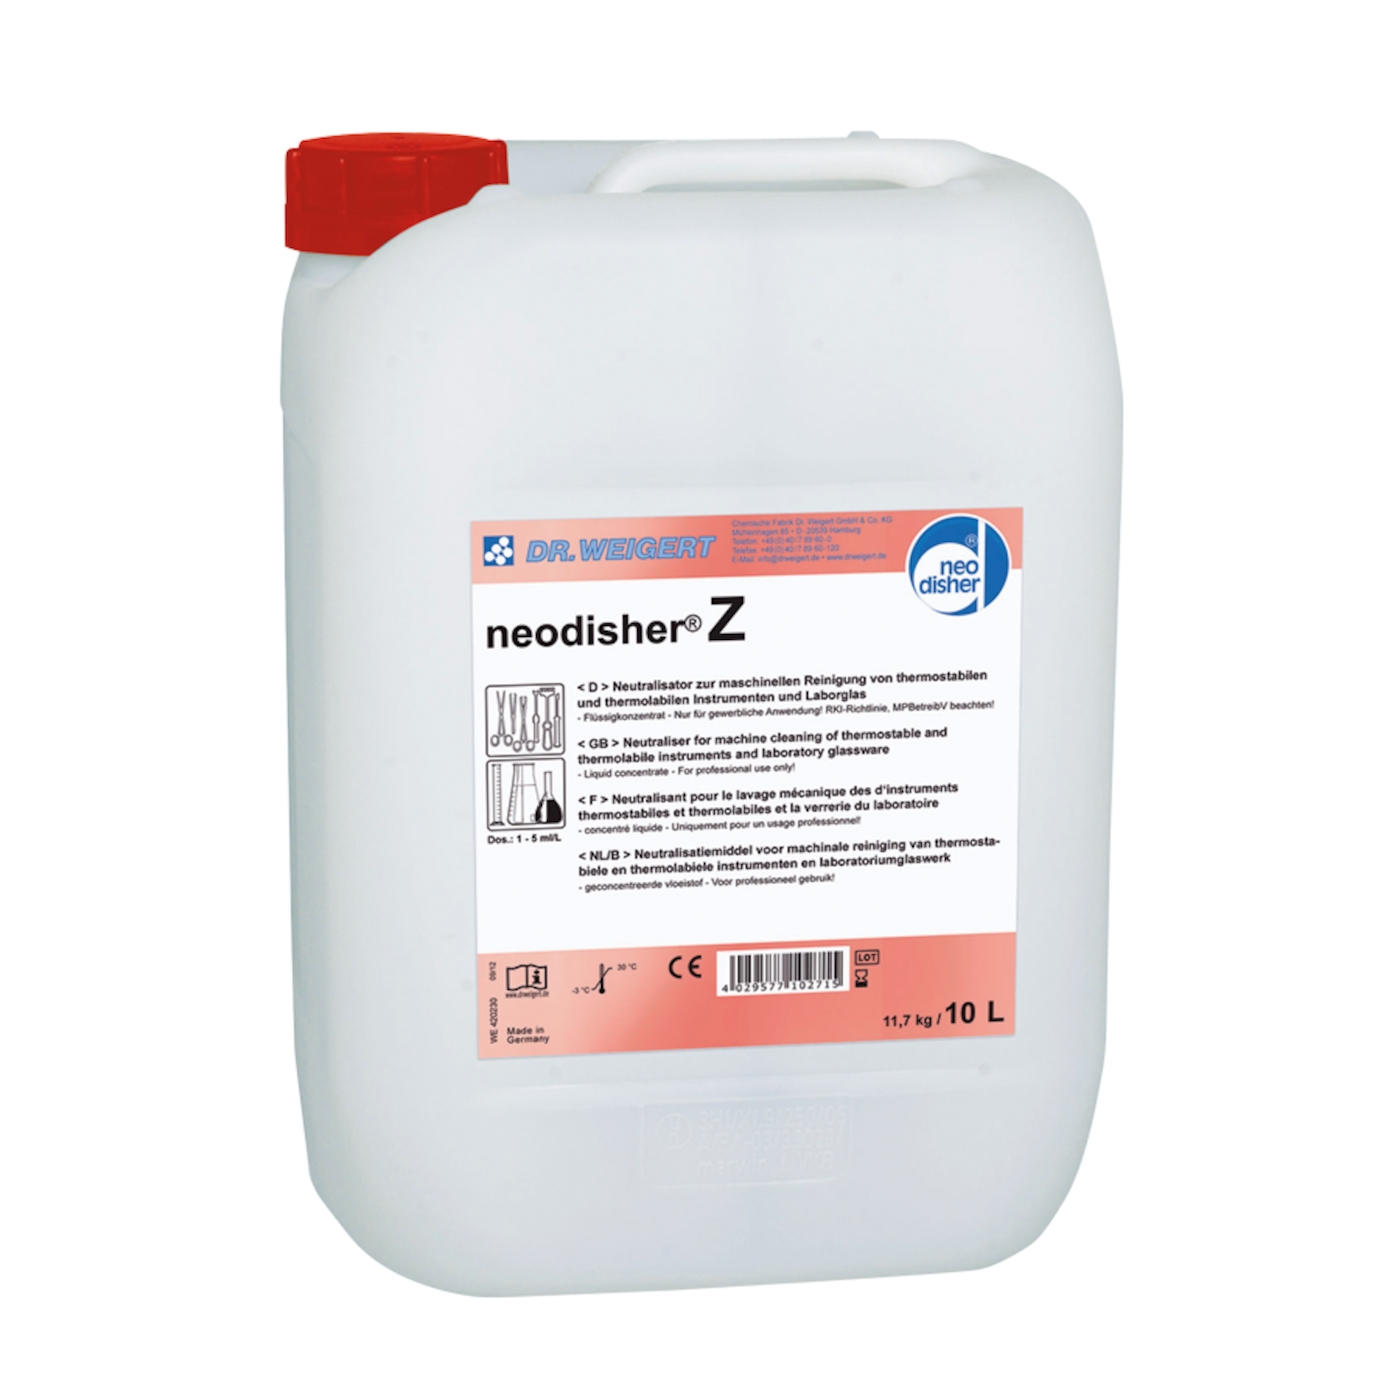 Neodisher Z à 10 Liter produktfoto Front View ZOOM